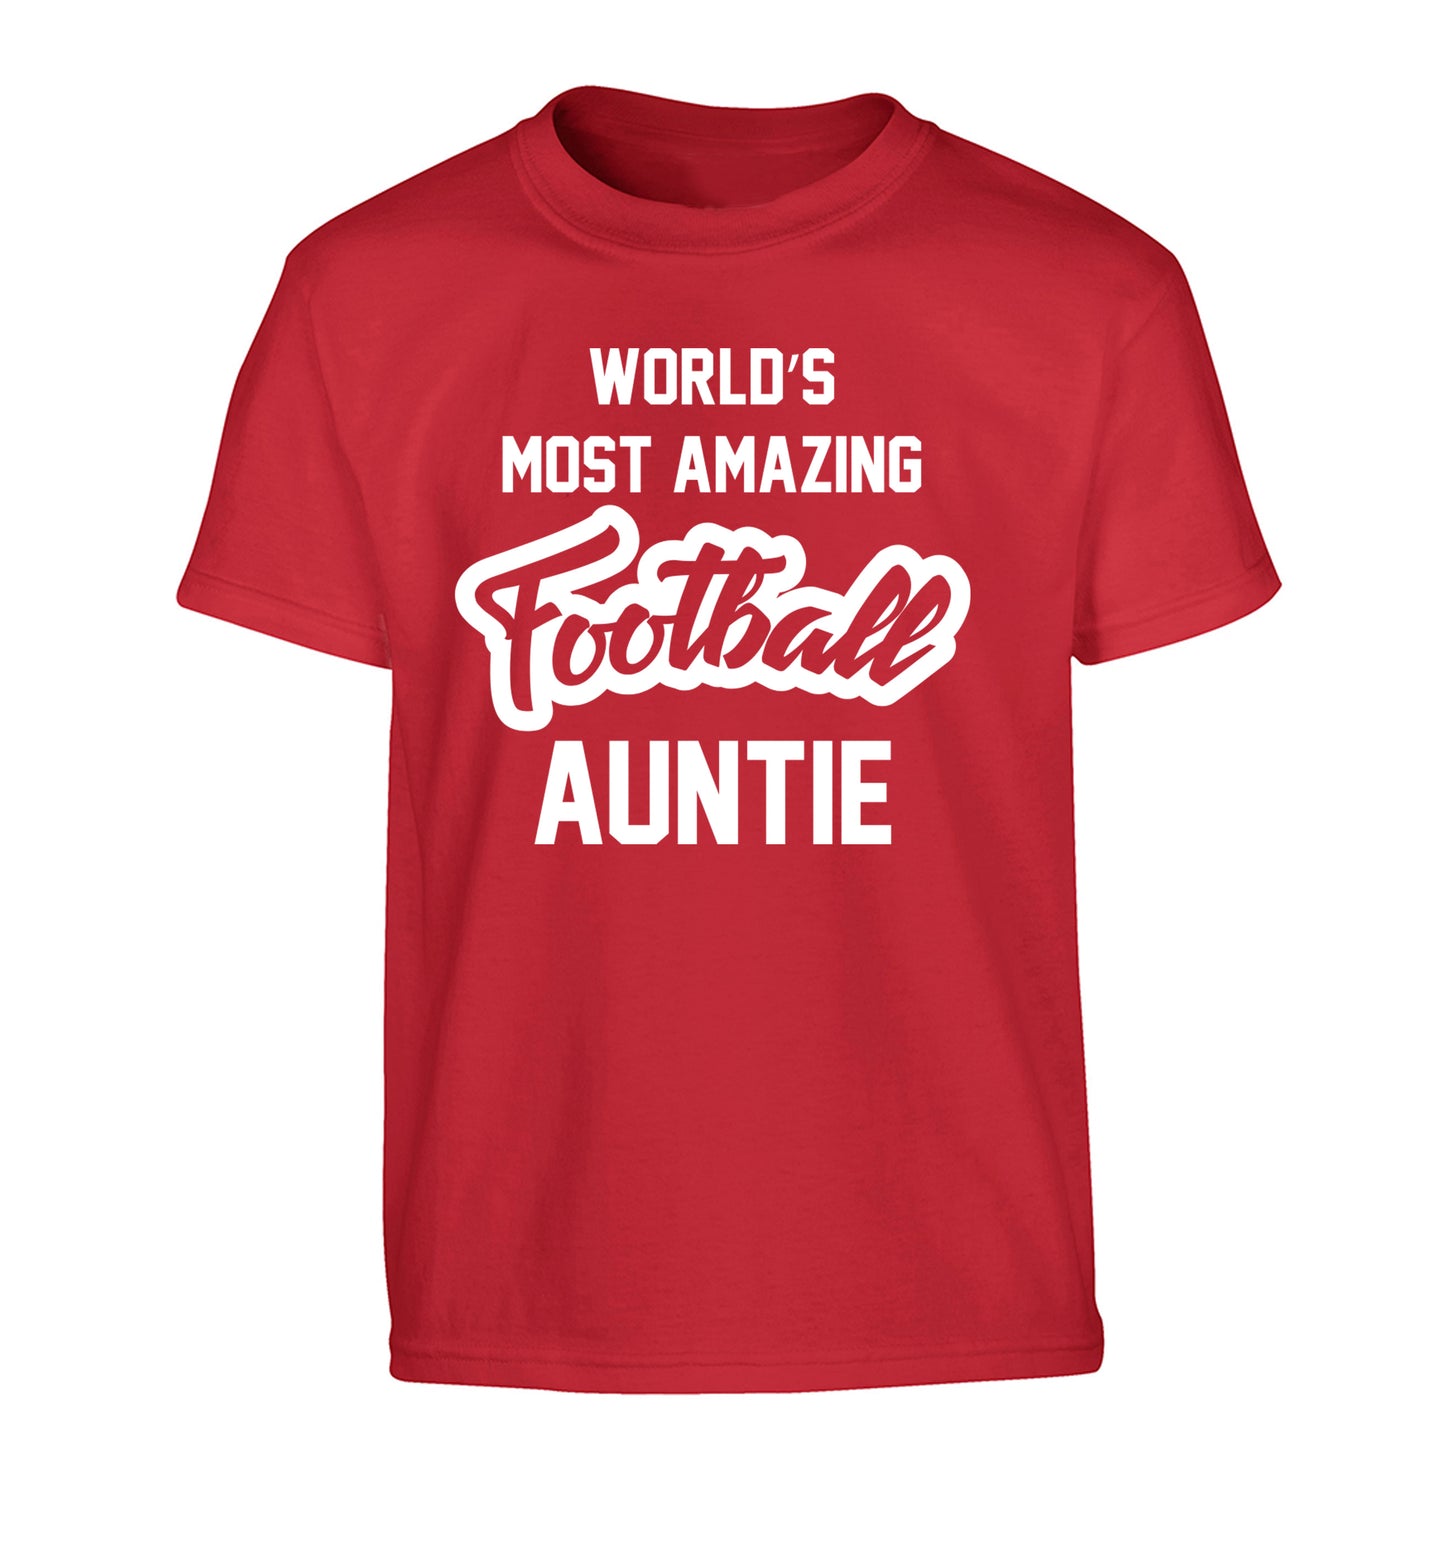 Worlds most amazing football auntie Children's red Tshirt 12-14 Years